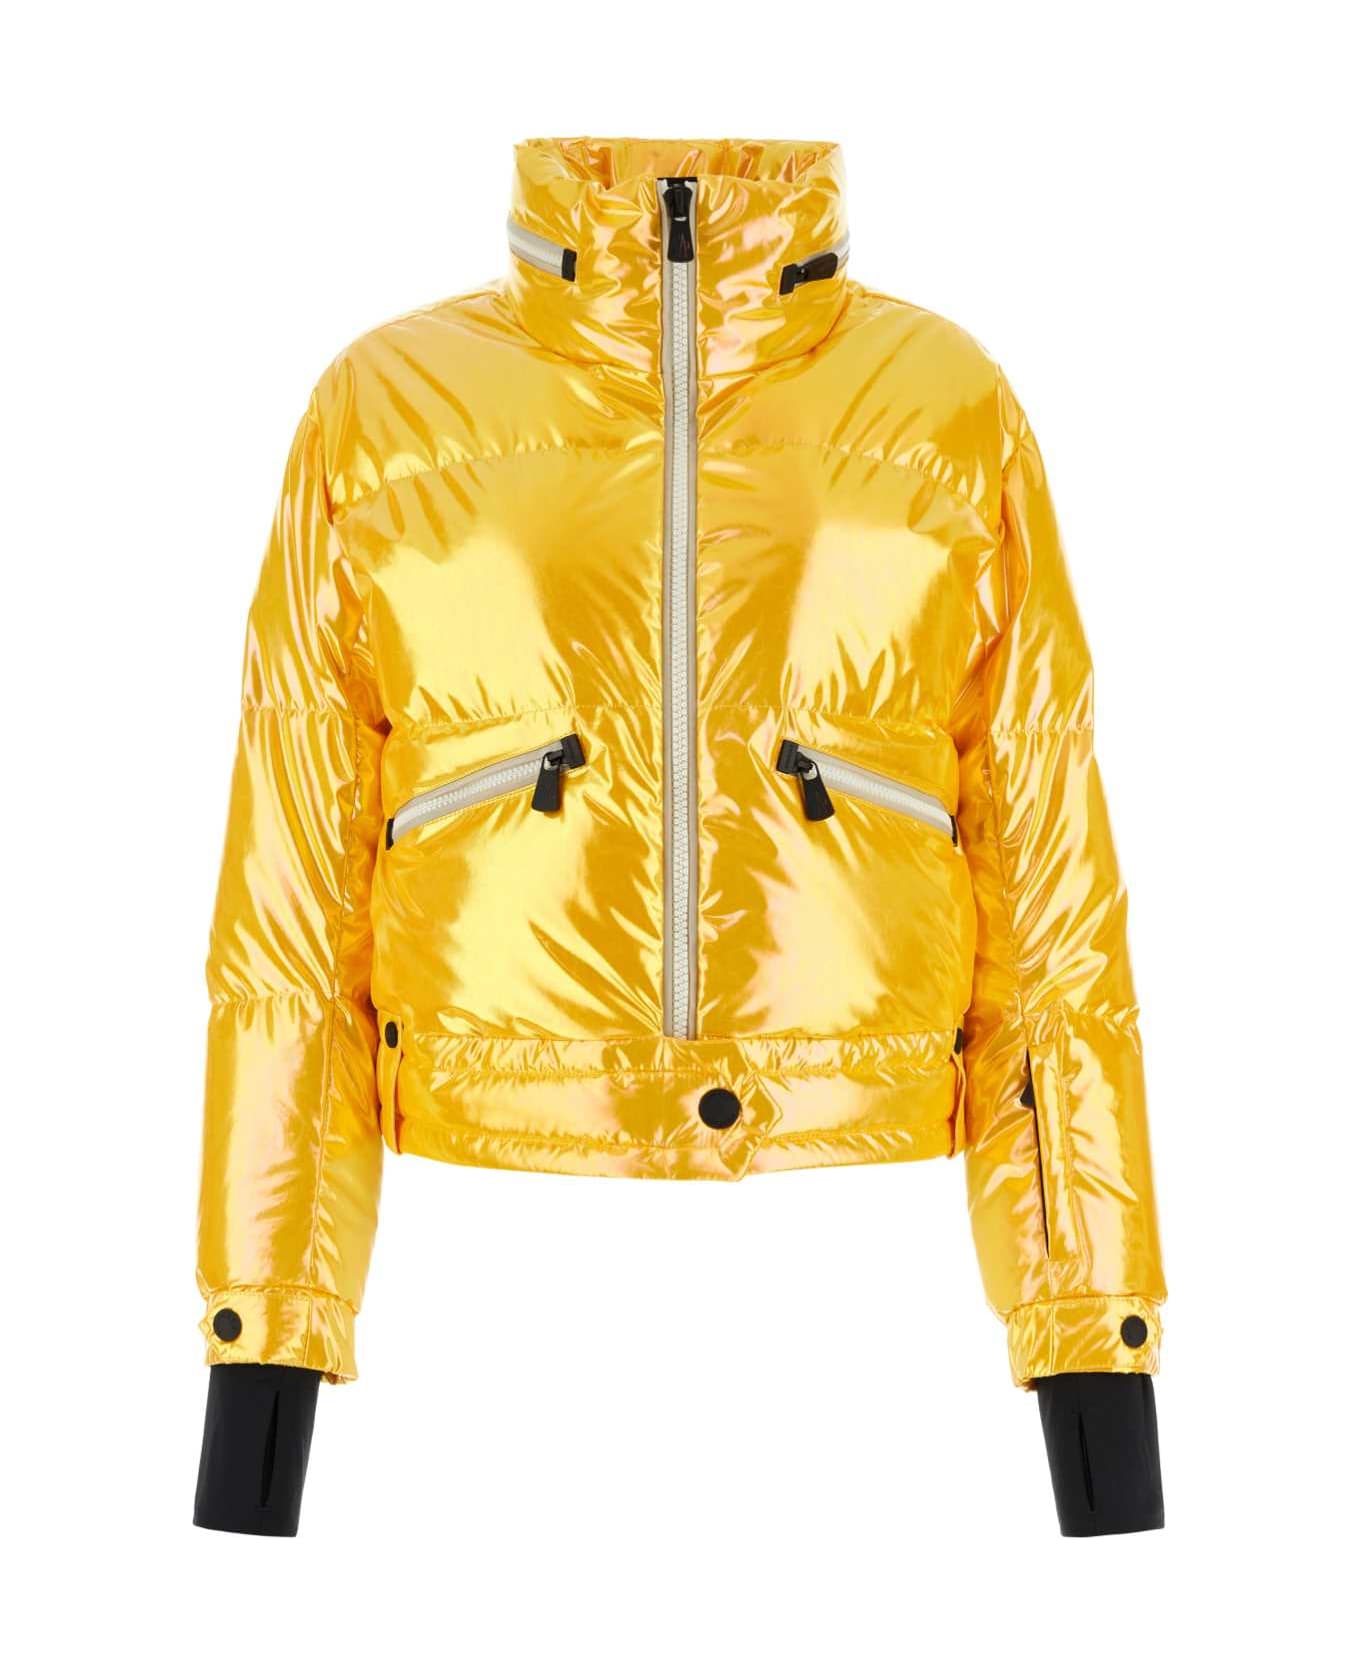 Moncler Grenoble Yellow Polyester Biche Down Jacket - M10